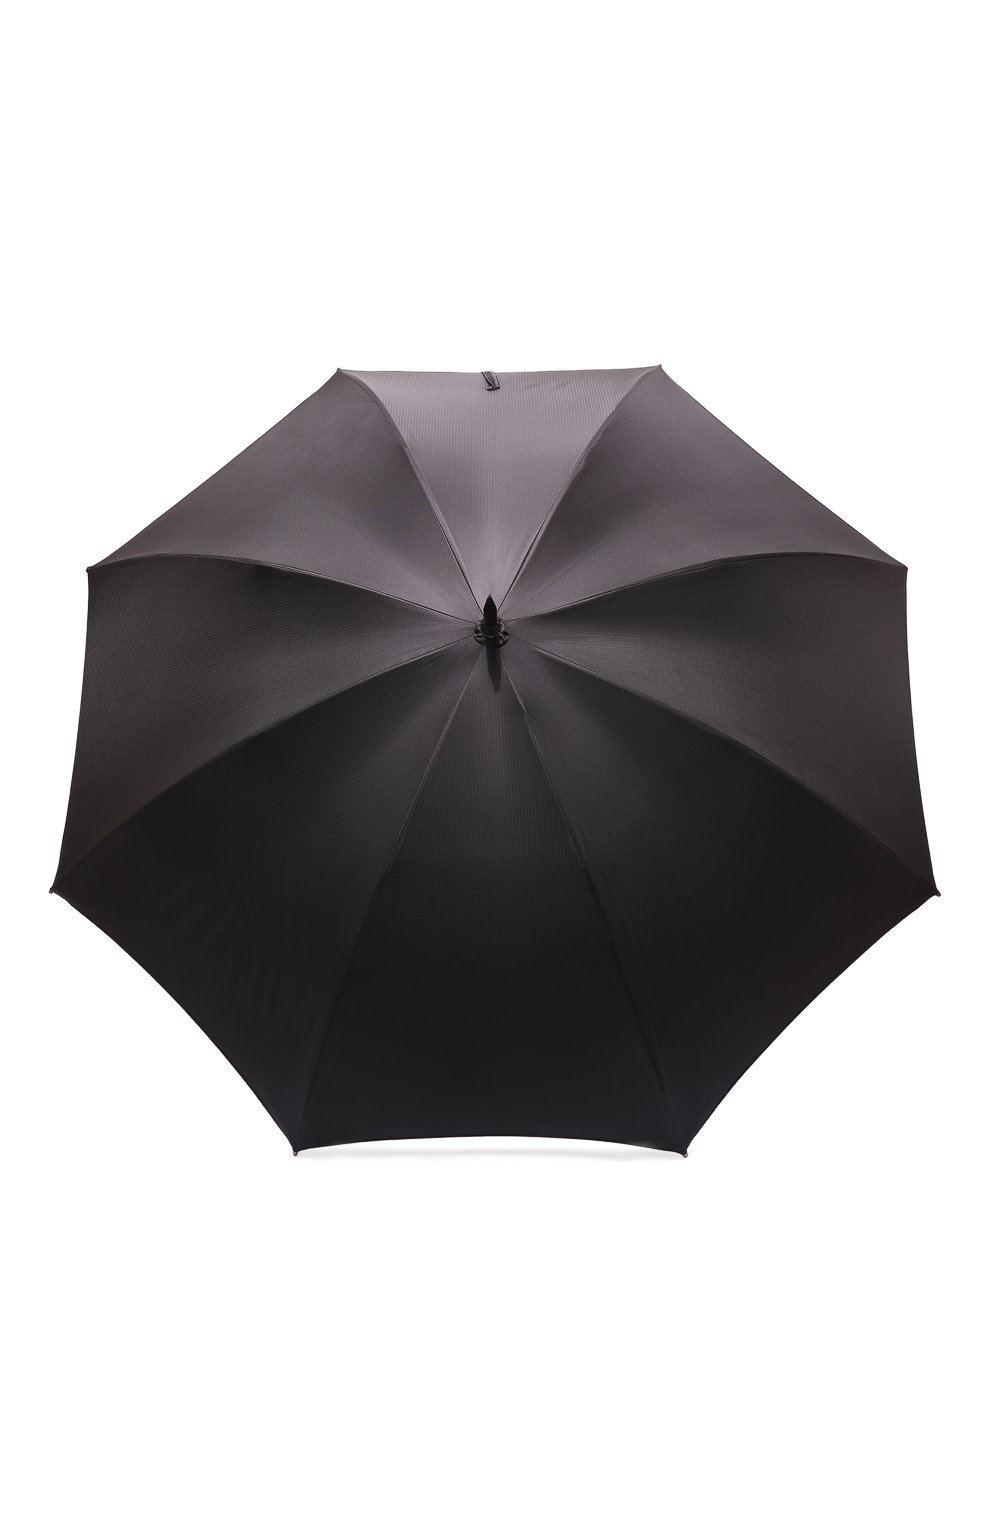 Мужской зонт-трость PASOTTI OMBRELLI темно-серого цвета, арт. 0MITU0 145/MINICHEVR0N/1 | Фото 1 (Материал: Текстиль, Синтетический материал, Металл)